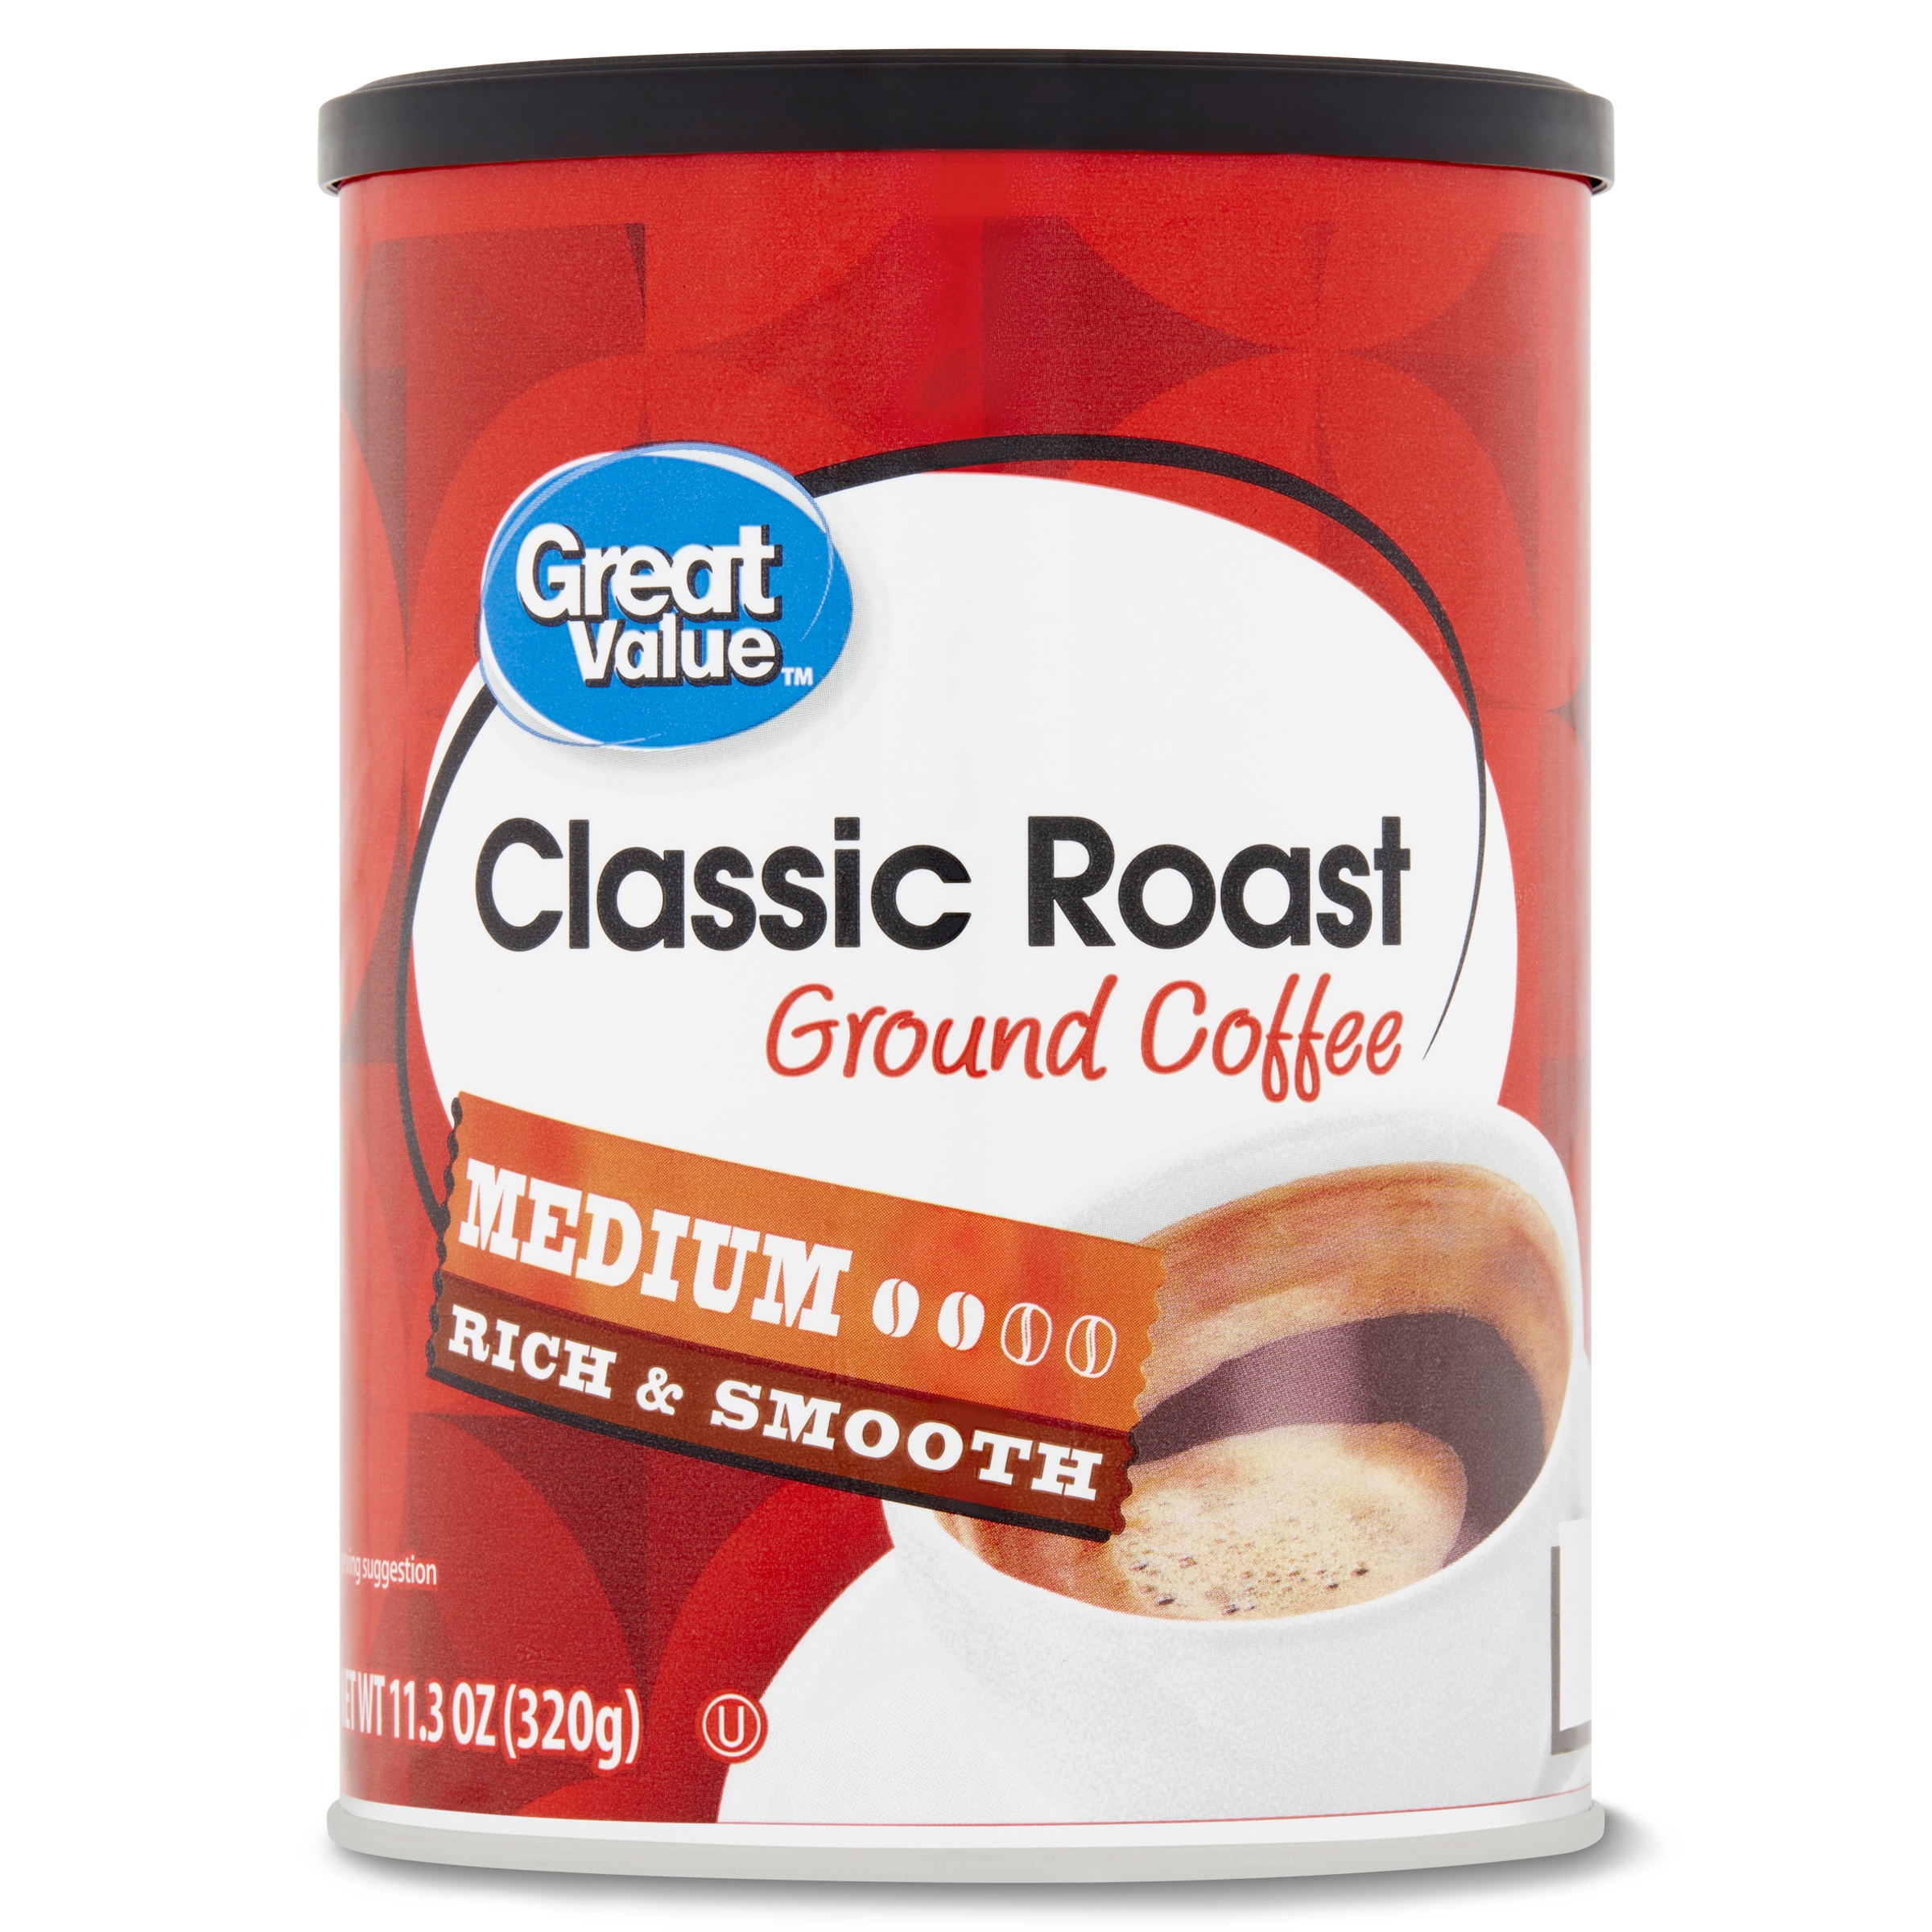 Great Value Classic Roast Medium Ground Coffee, 11.3 oz - image 1 of 8